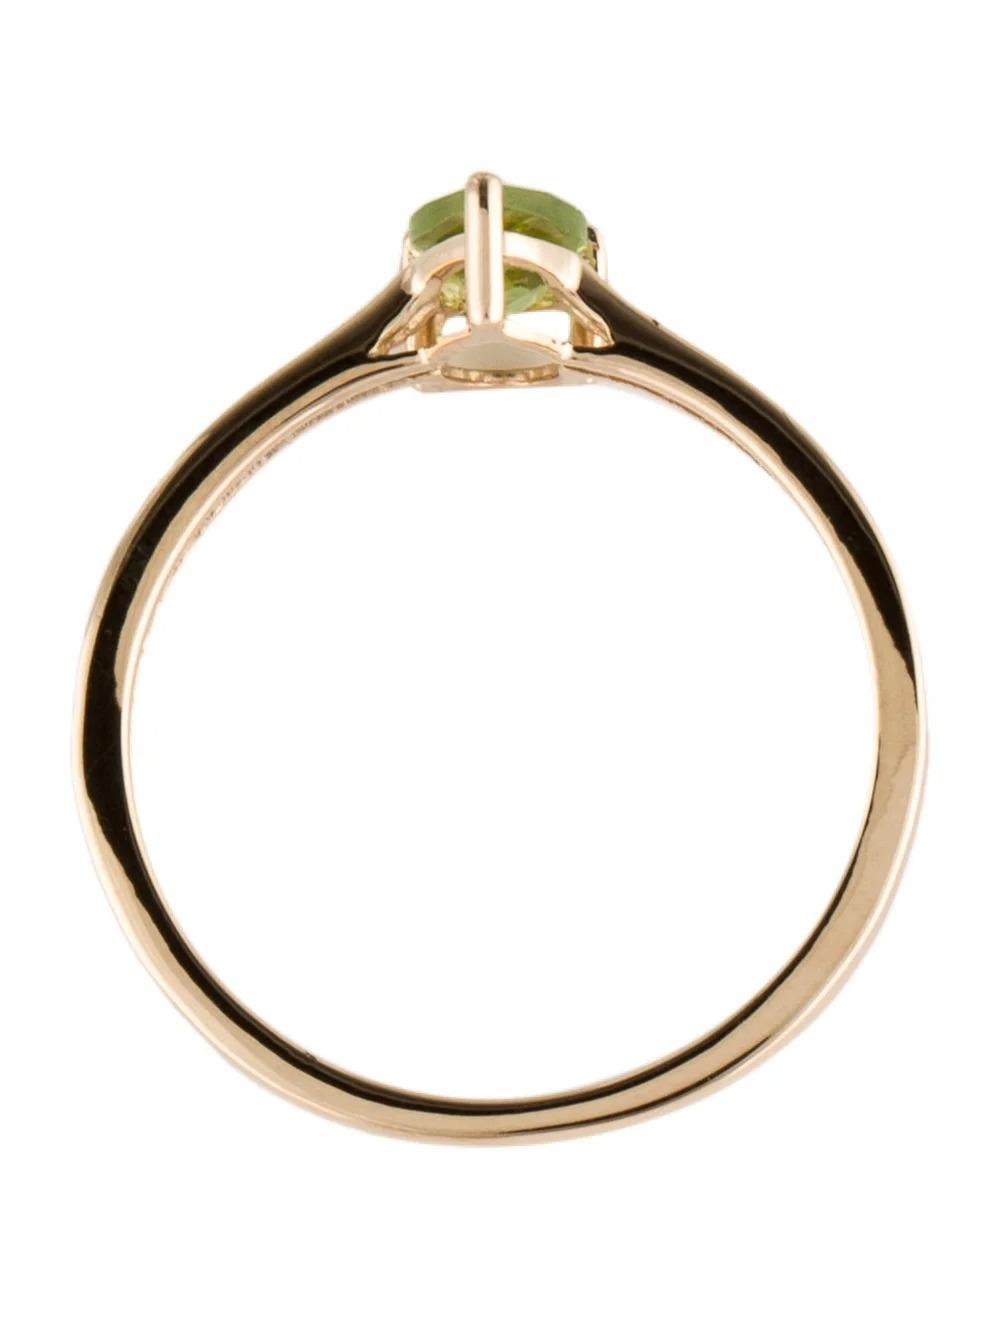 Women's 14K Peridot Cocktail Ring, Size 6.75: Elegant Design, Vibrant Color, Fine Gold For Sale